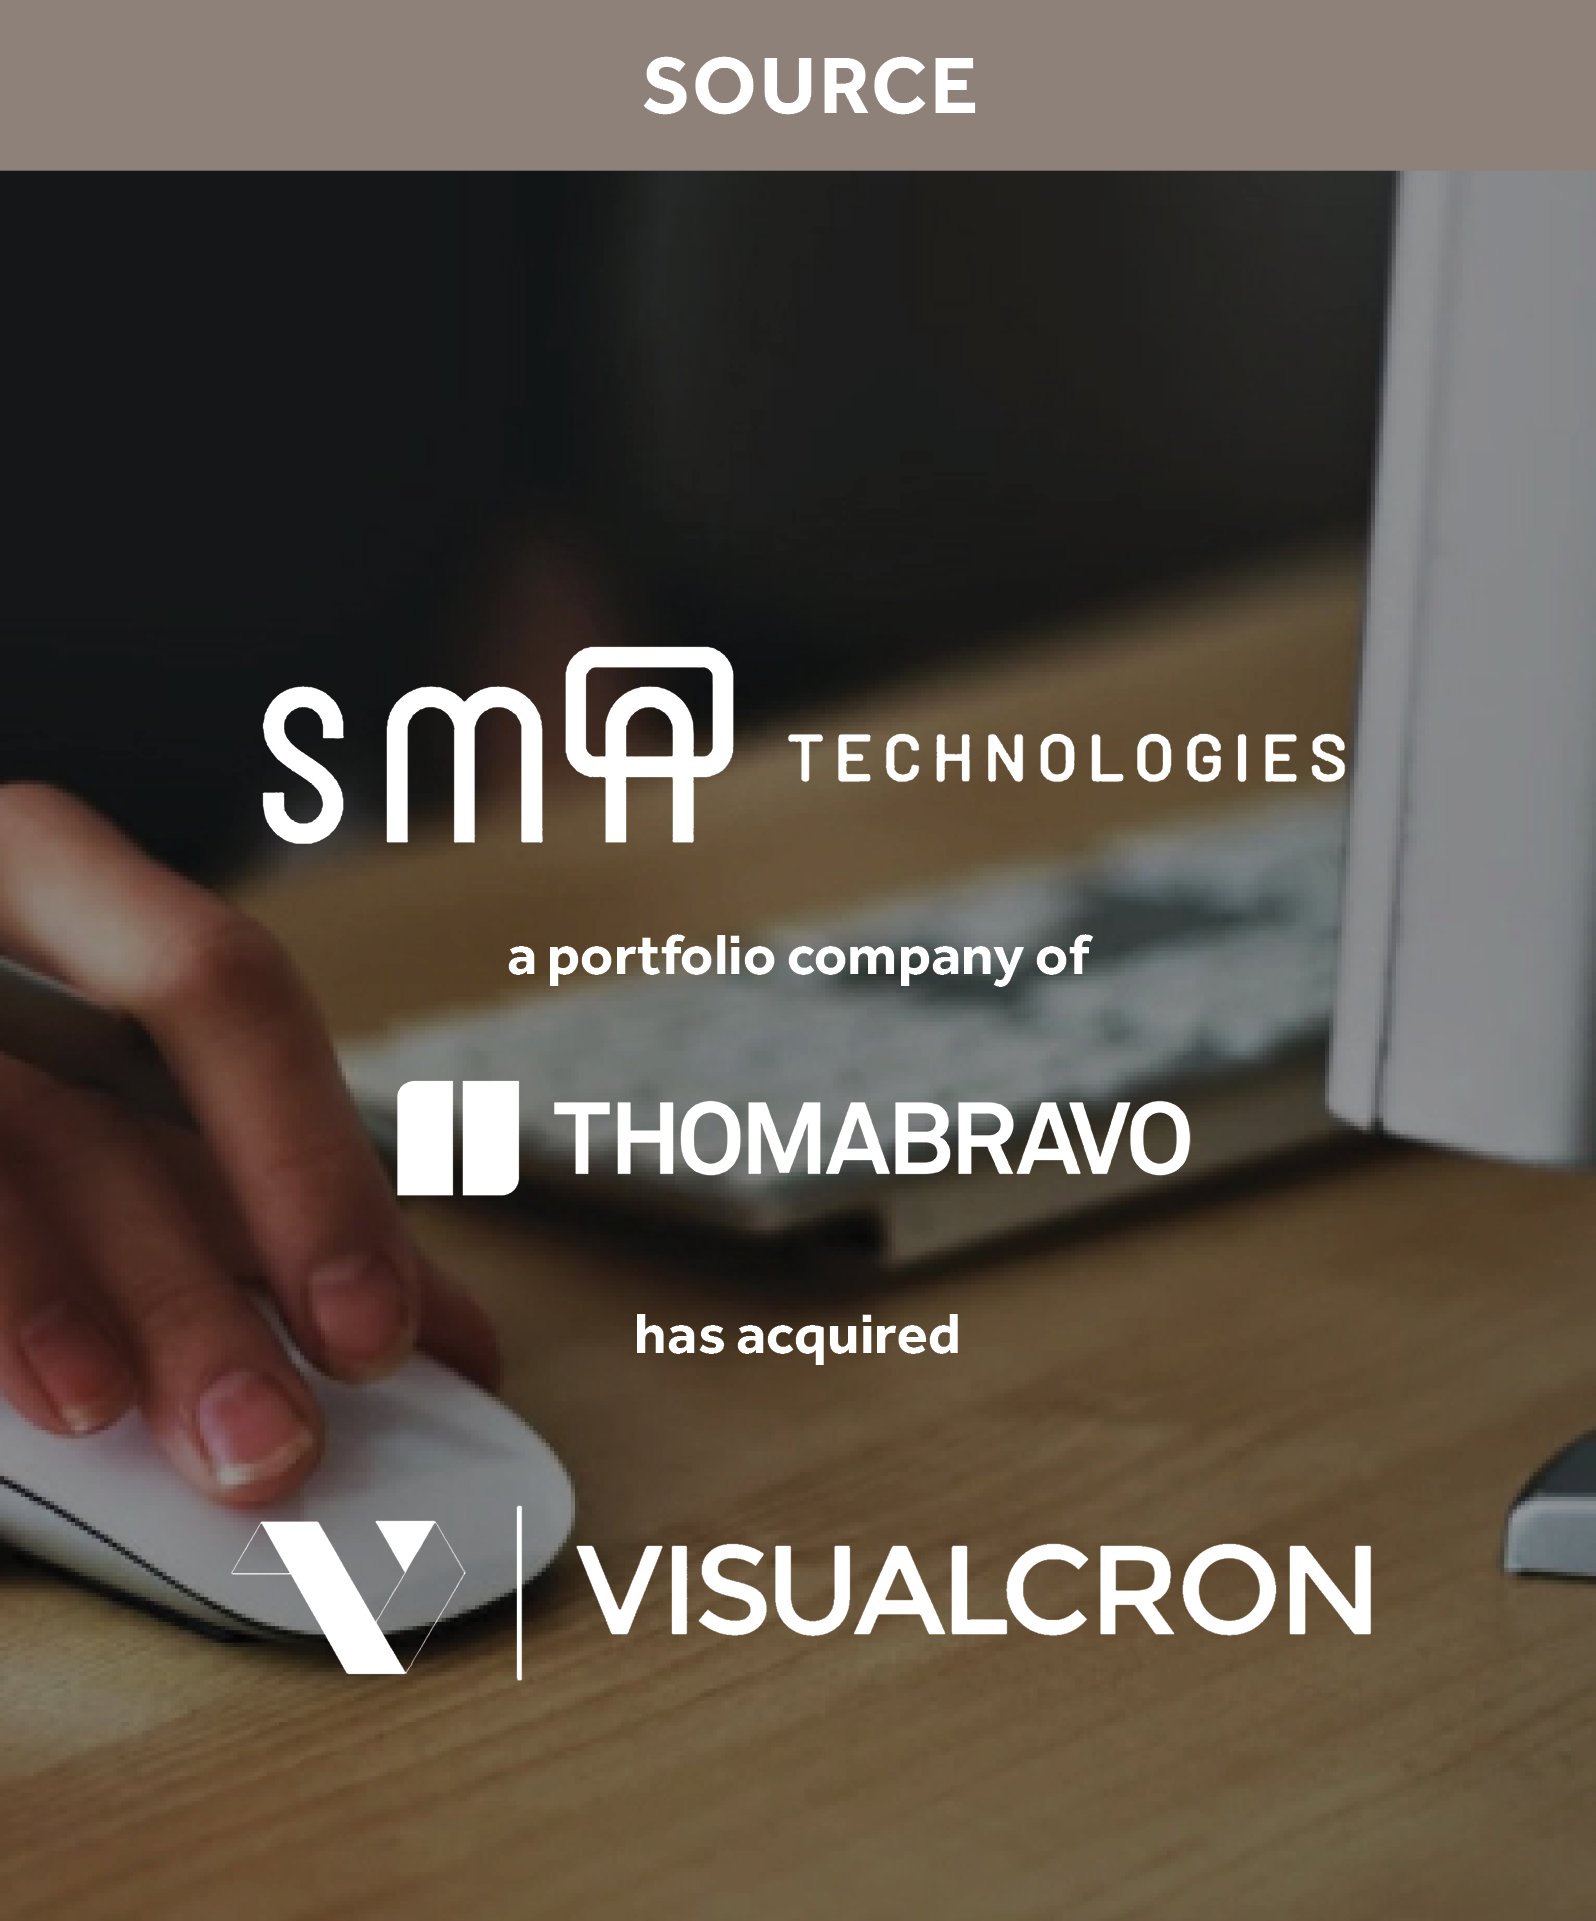 SMA_visualcron_webtombstone